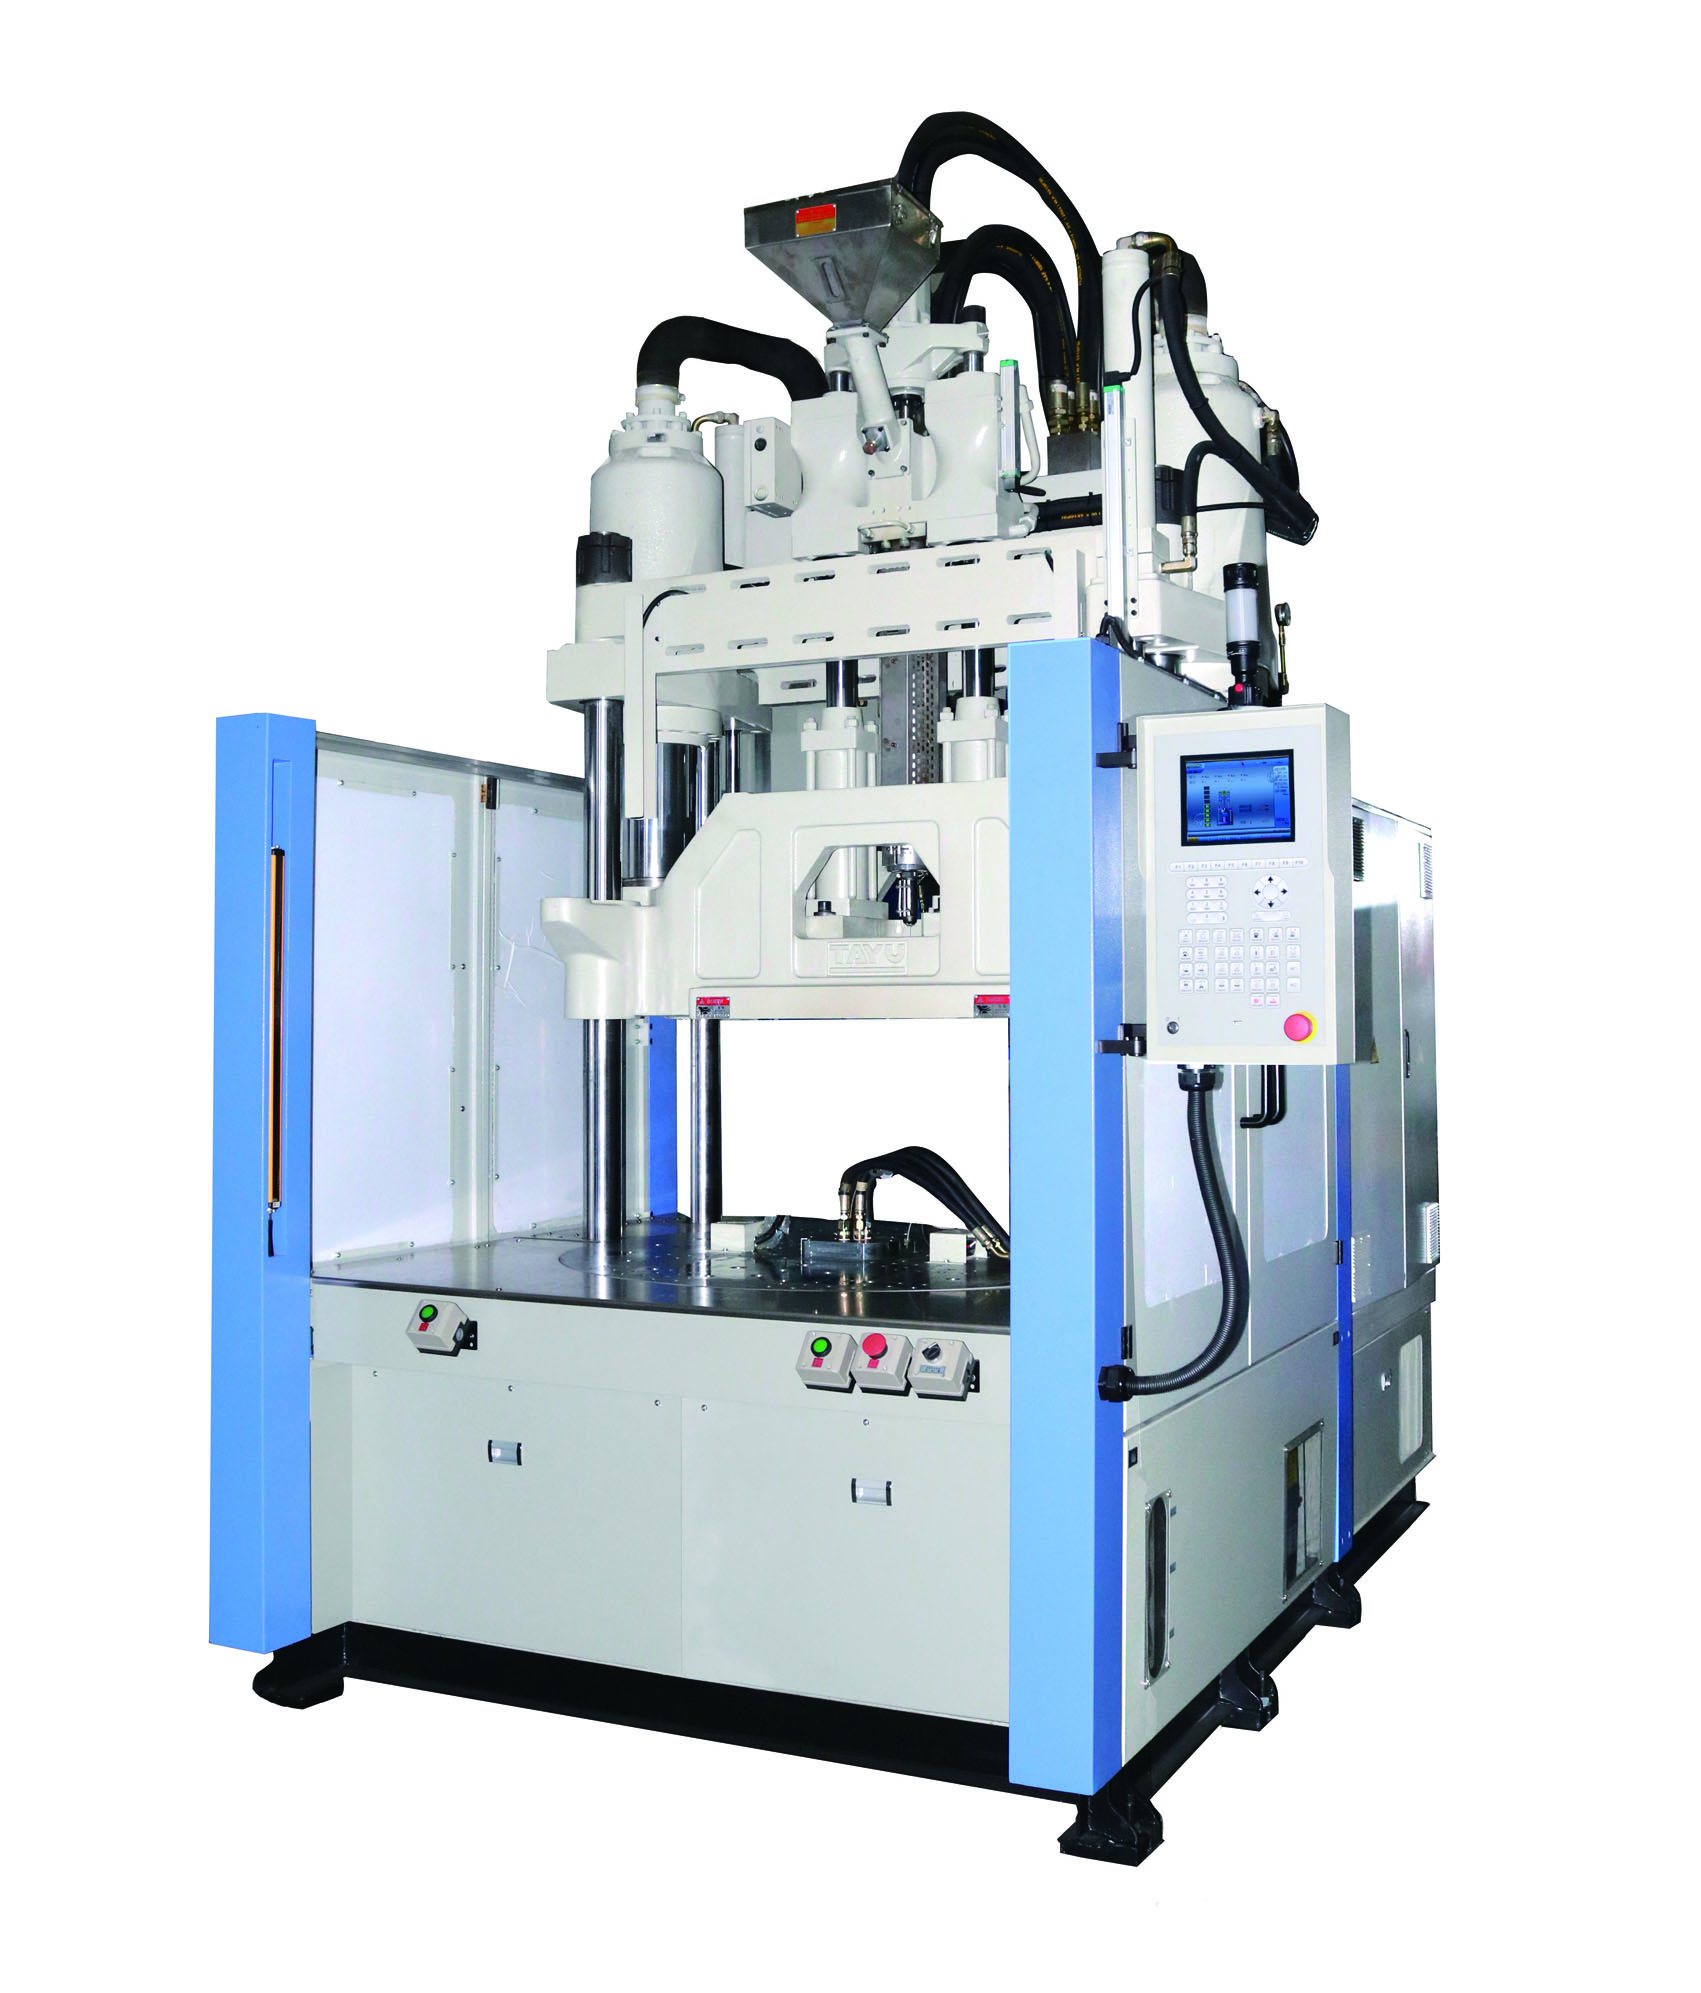 TYU-1200.2R vertical injection molding machine